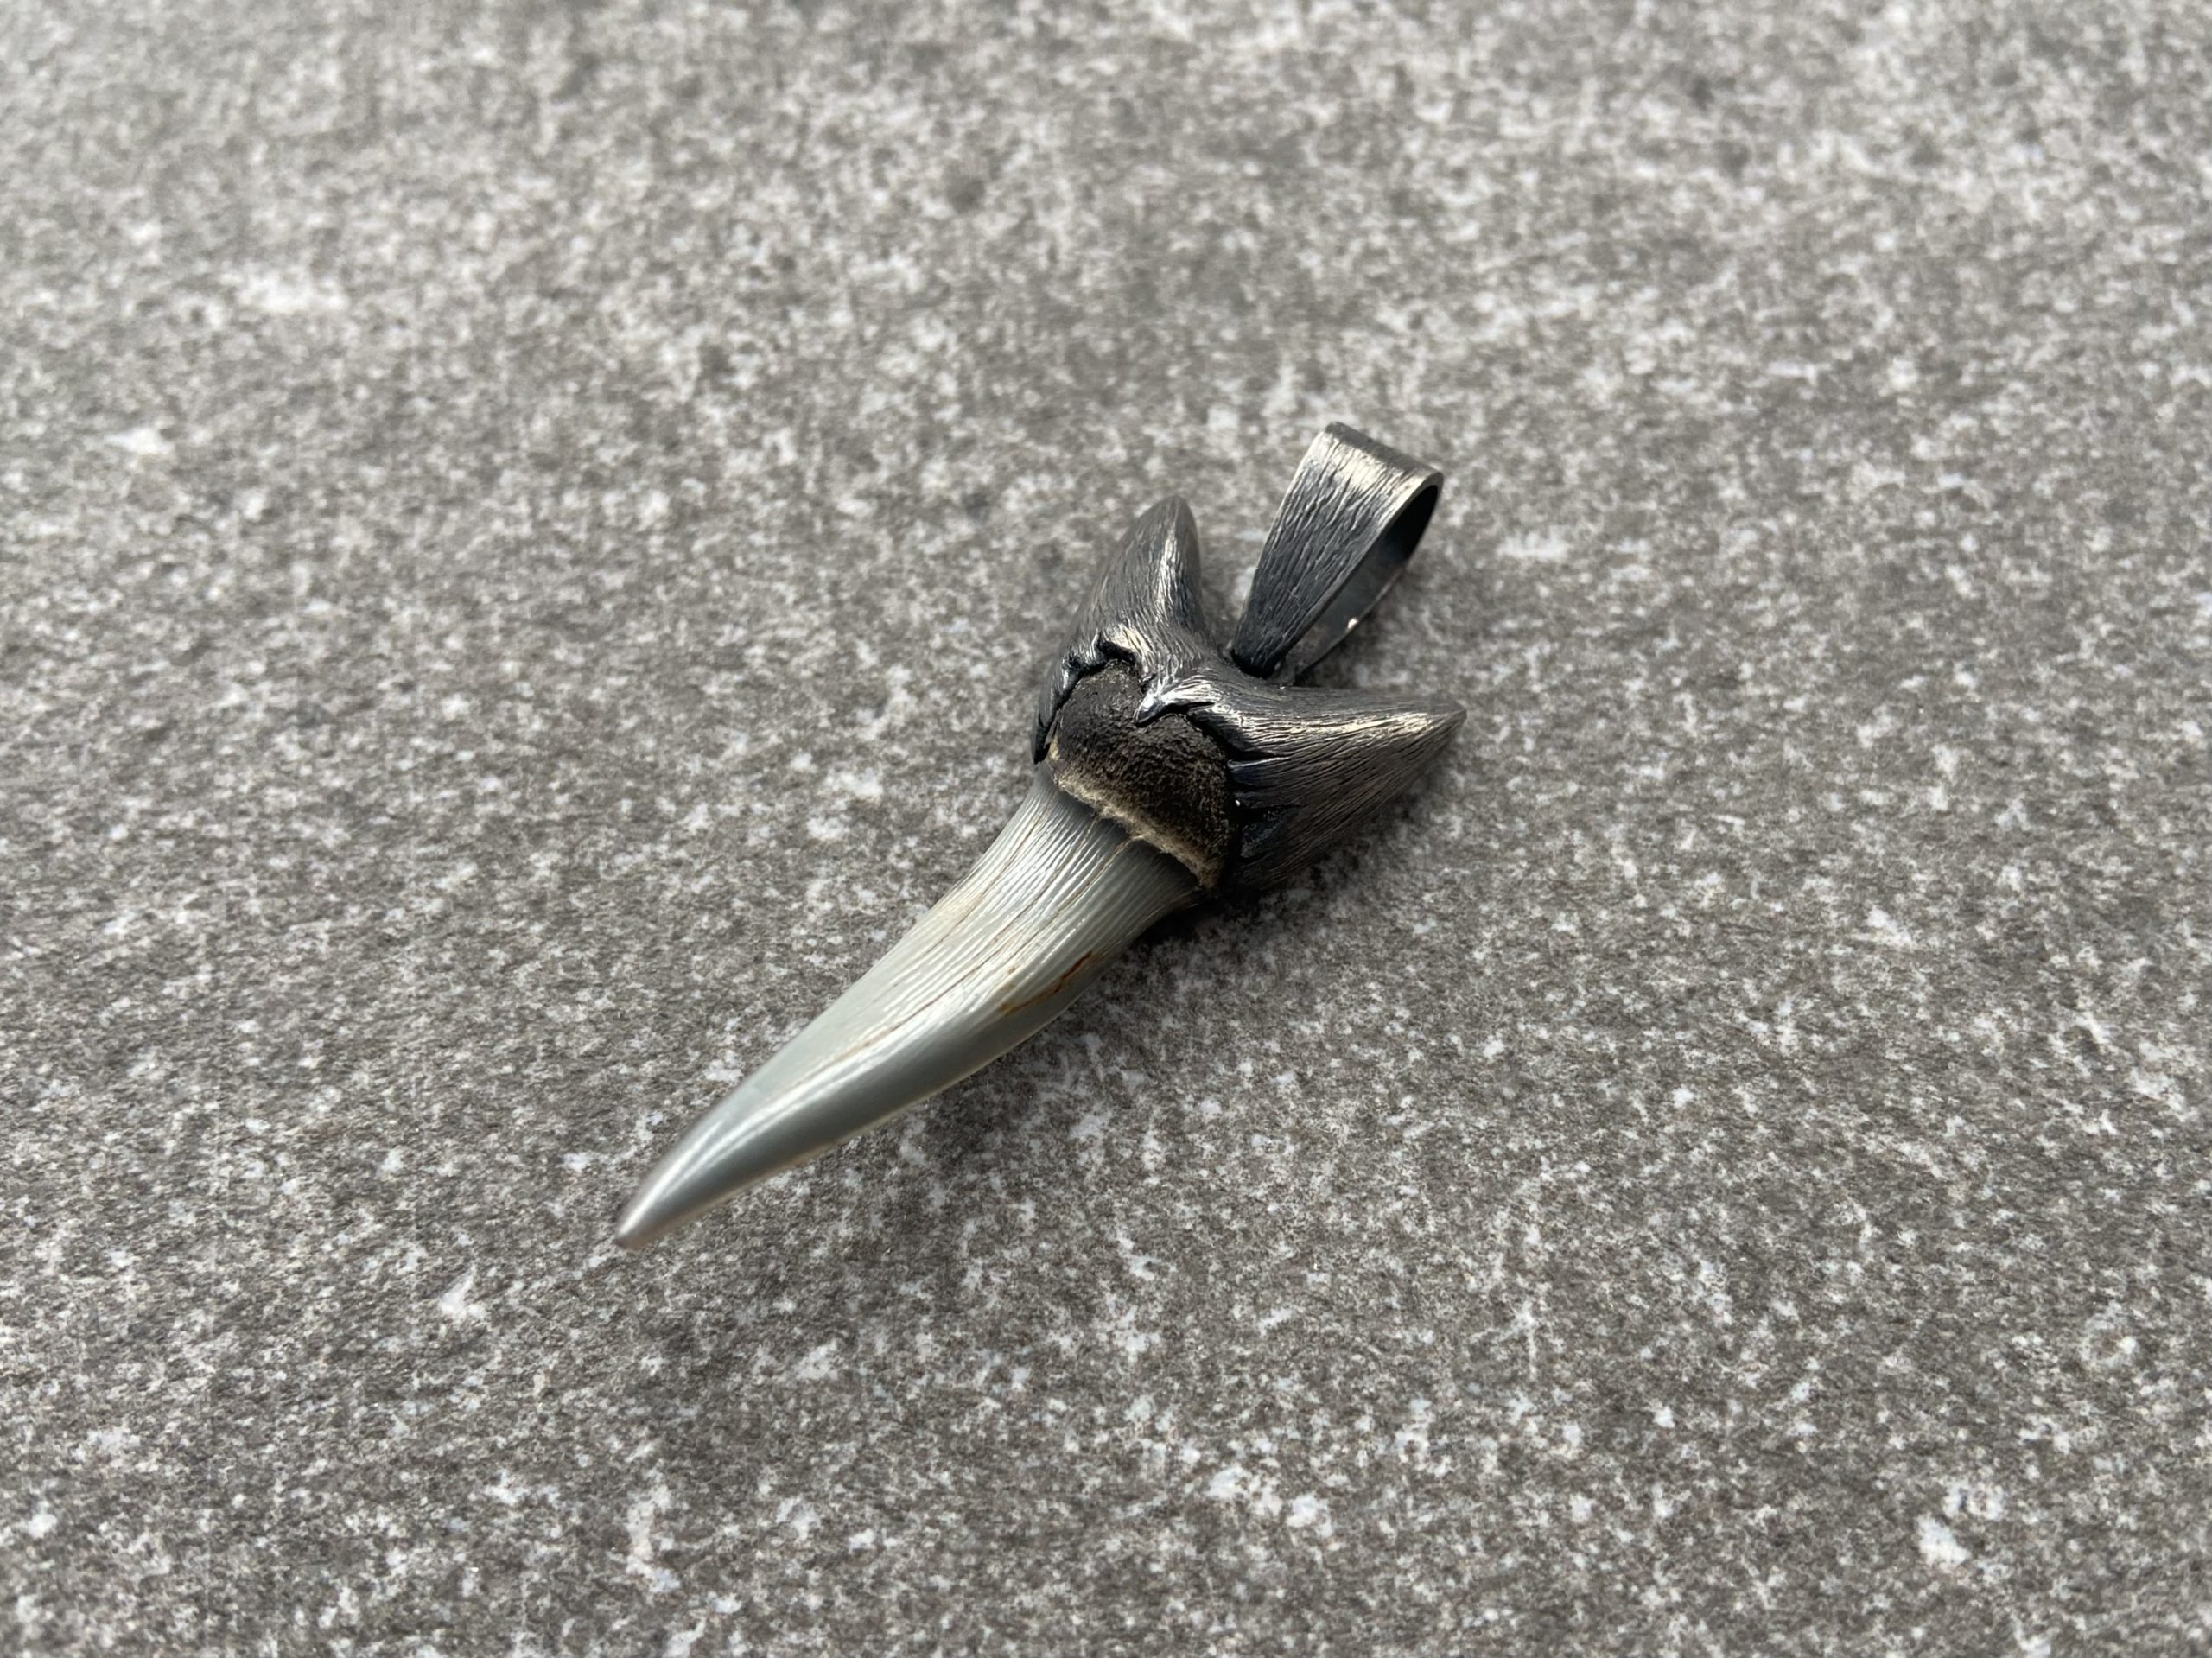 Acient shark tooth pendant